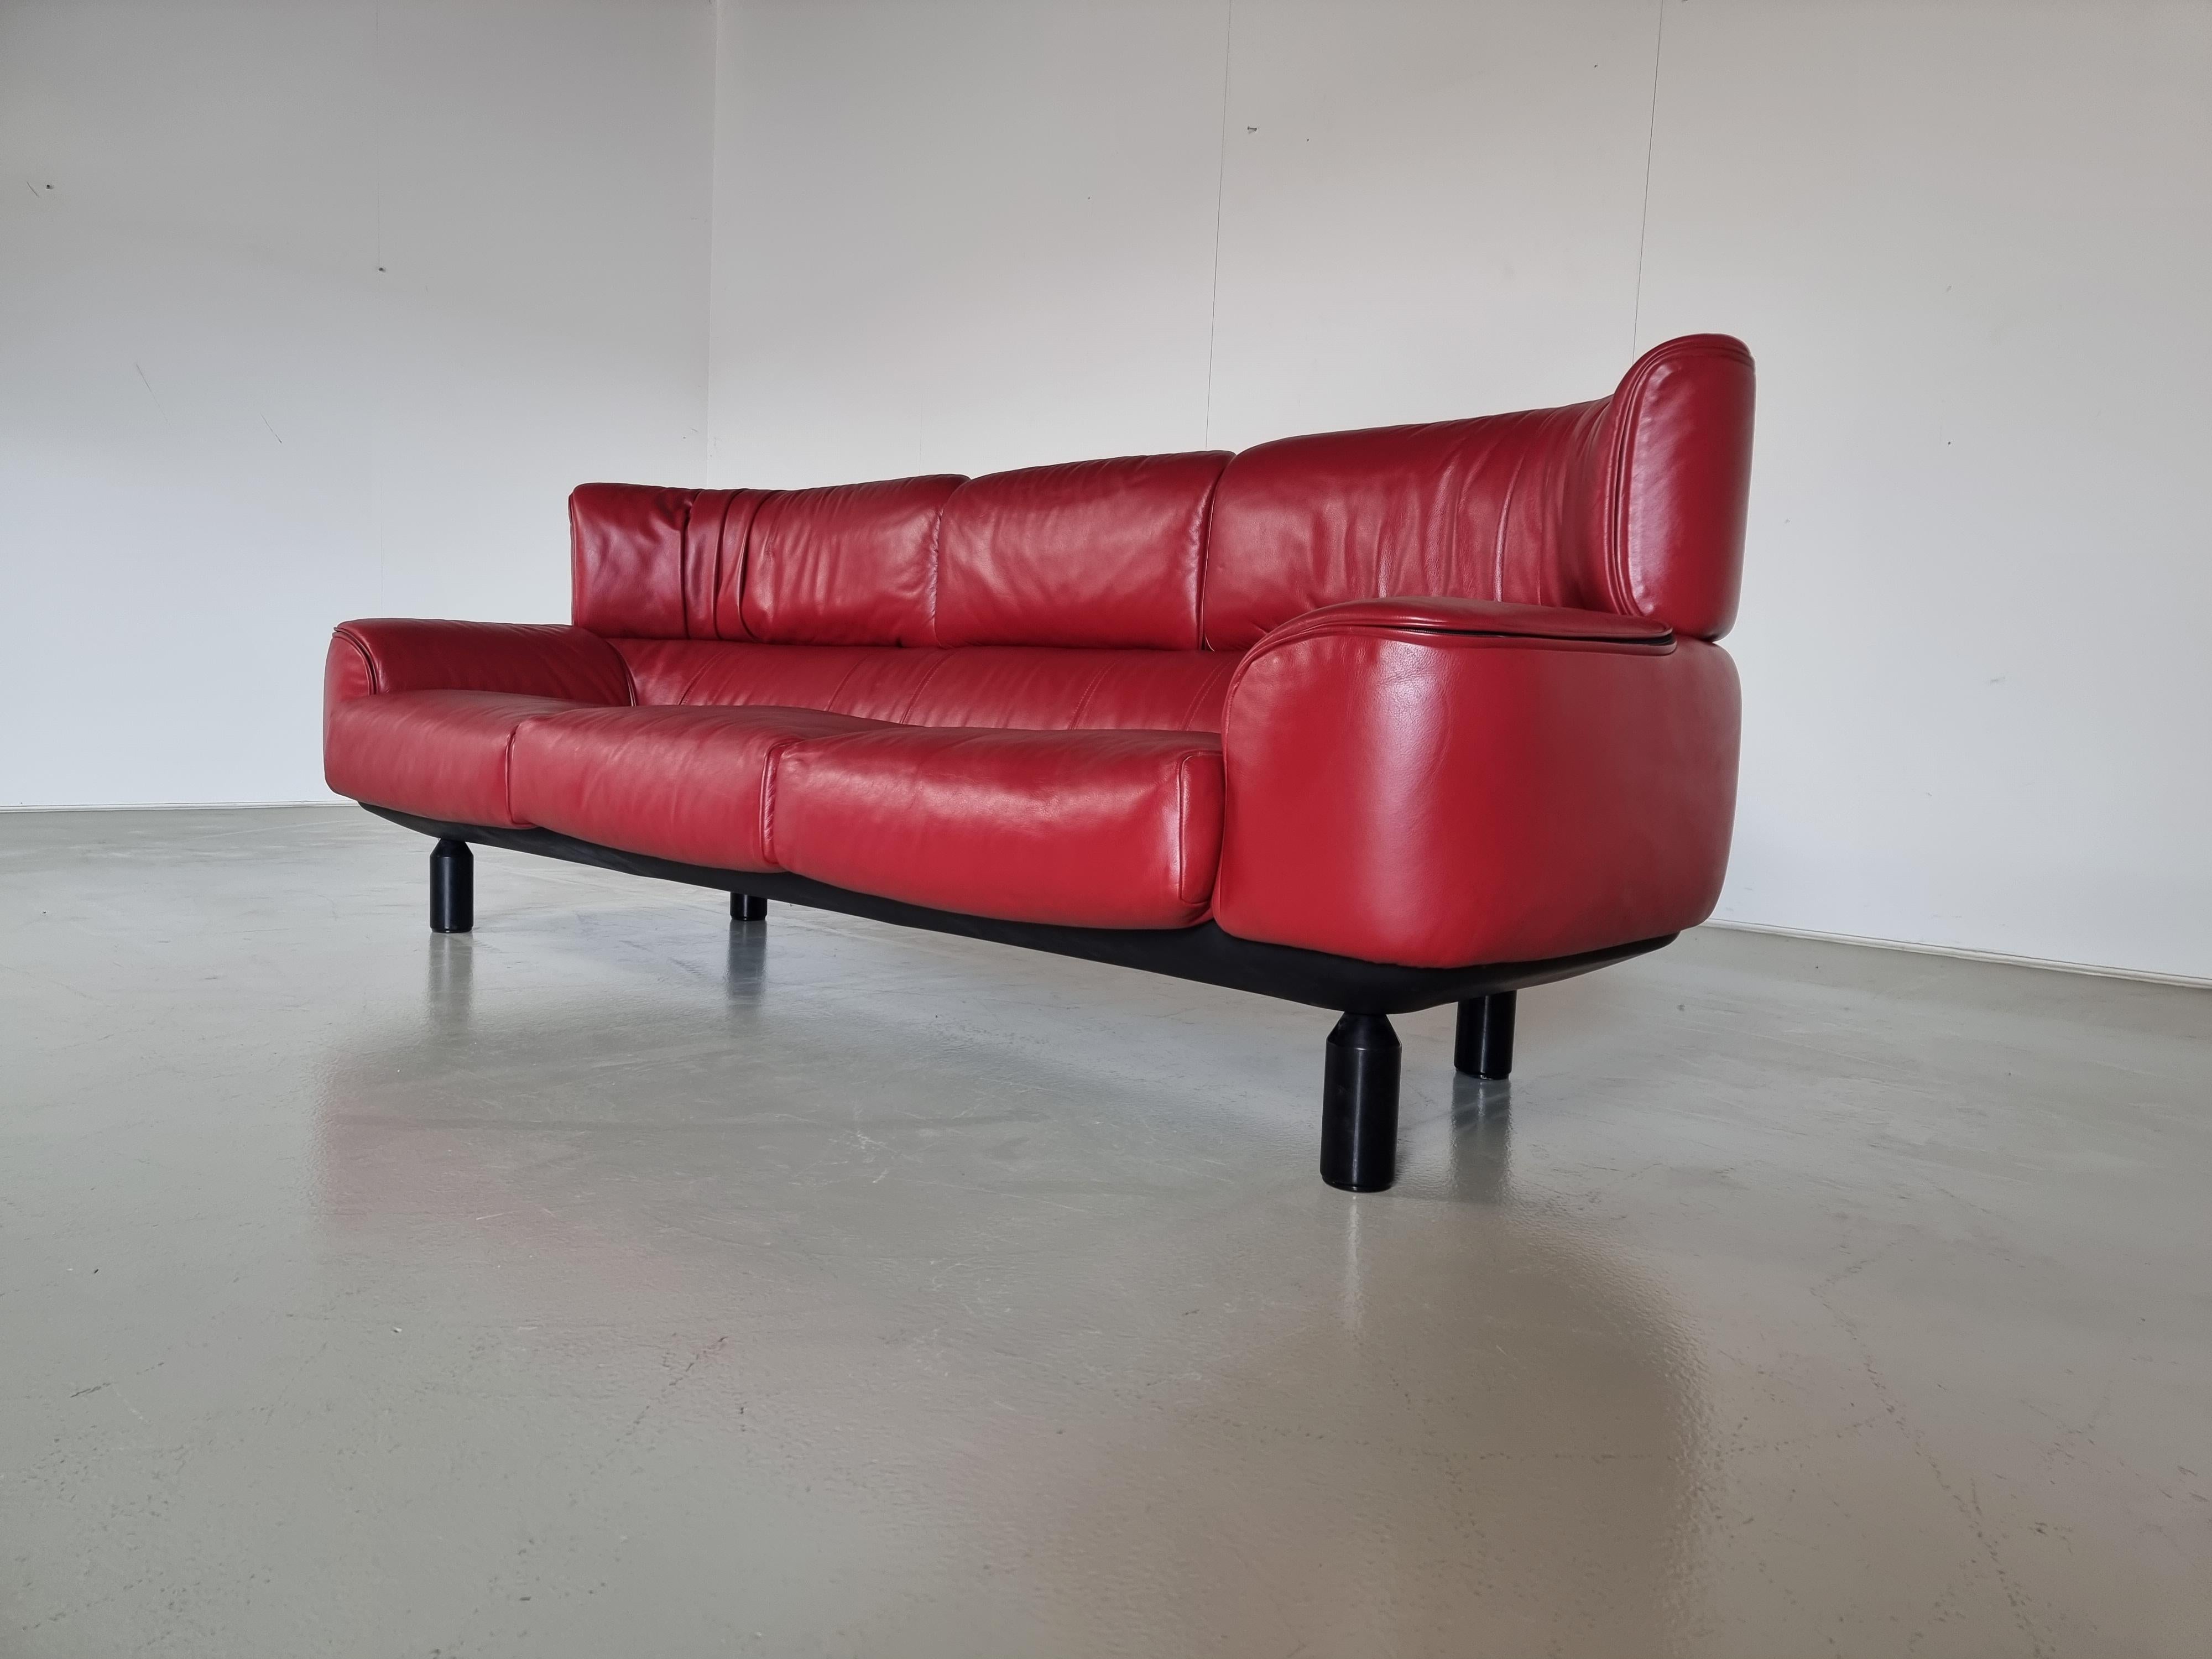 Leather Bull sofa by Gianfranco Frattini for Cassina, Italy, 1987